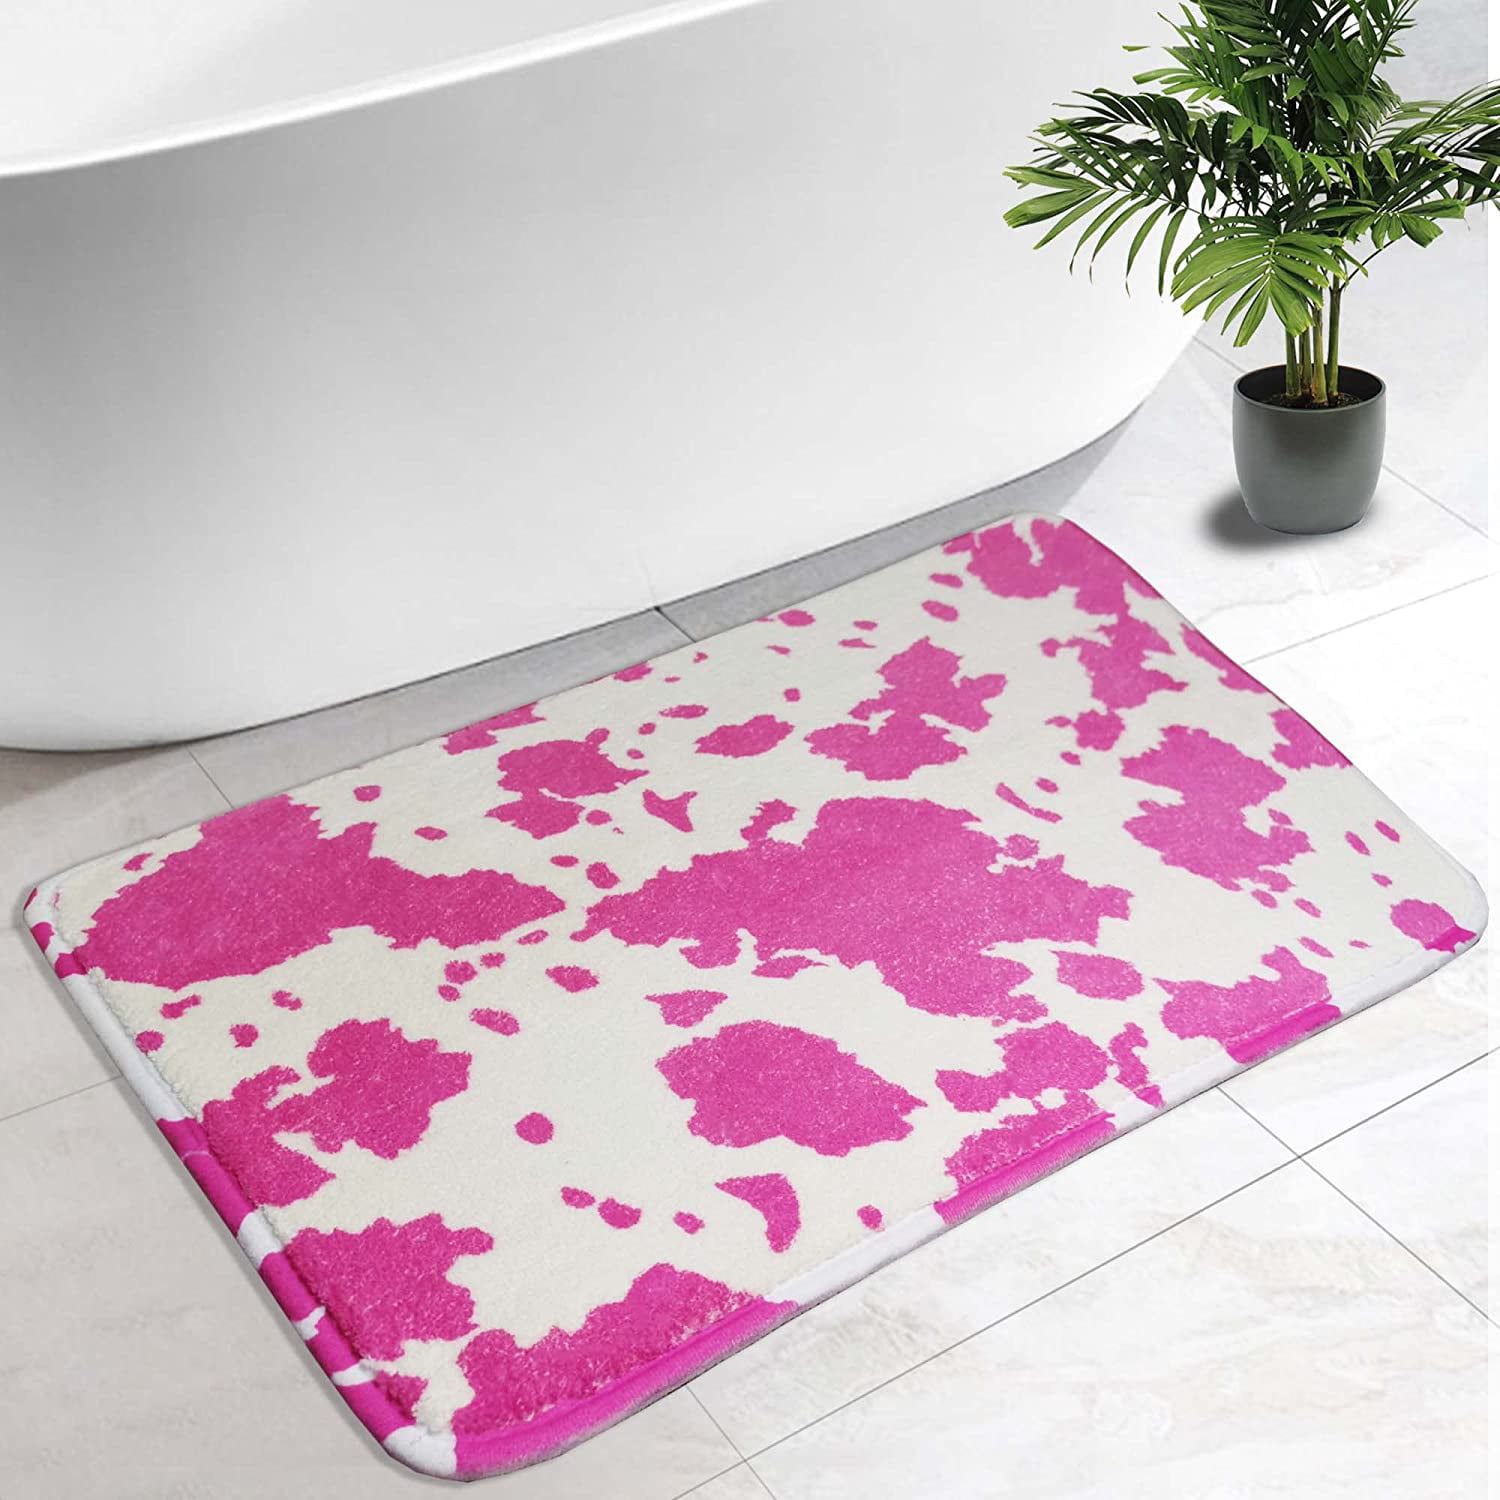 Pink Cow Print Bathroom Rug Farmhouse Bathroom Rug Runner Rug Non Slip  Small Bath Mat for Tub, Shower, and Bath Room 16 x 24 inch 